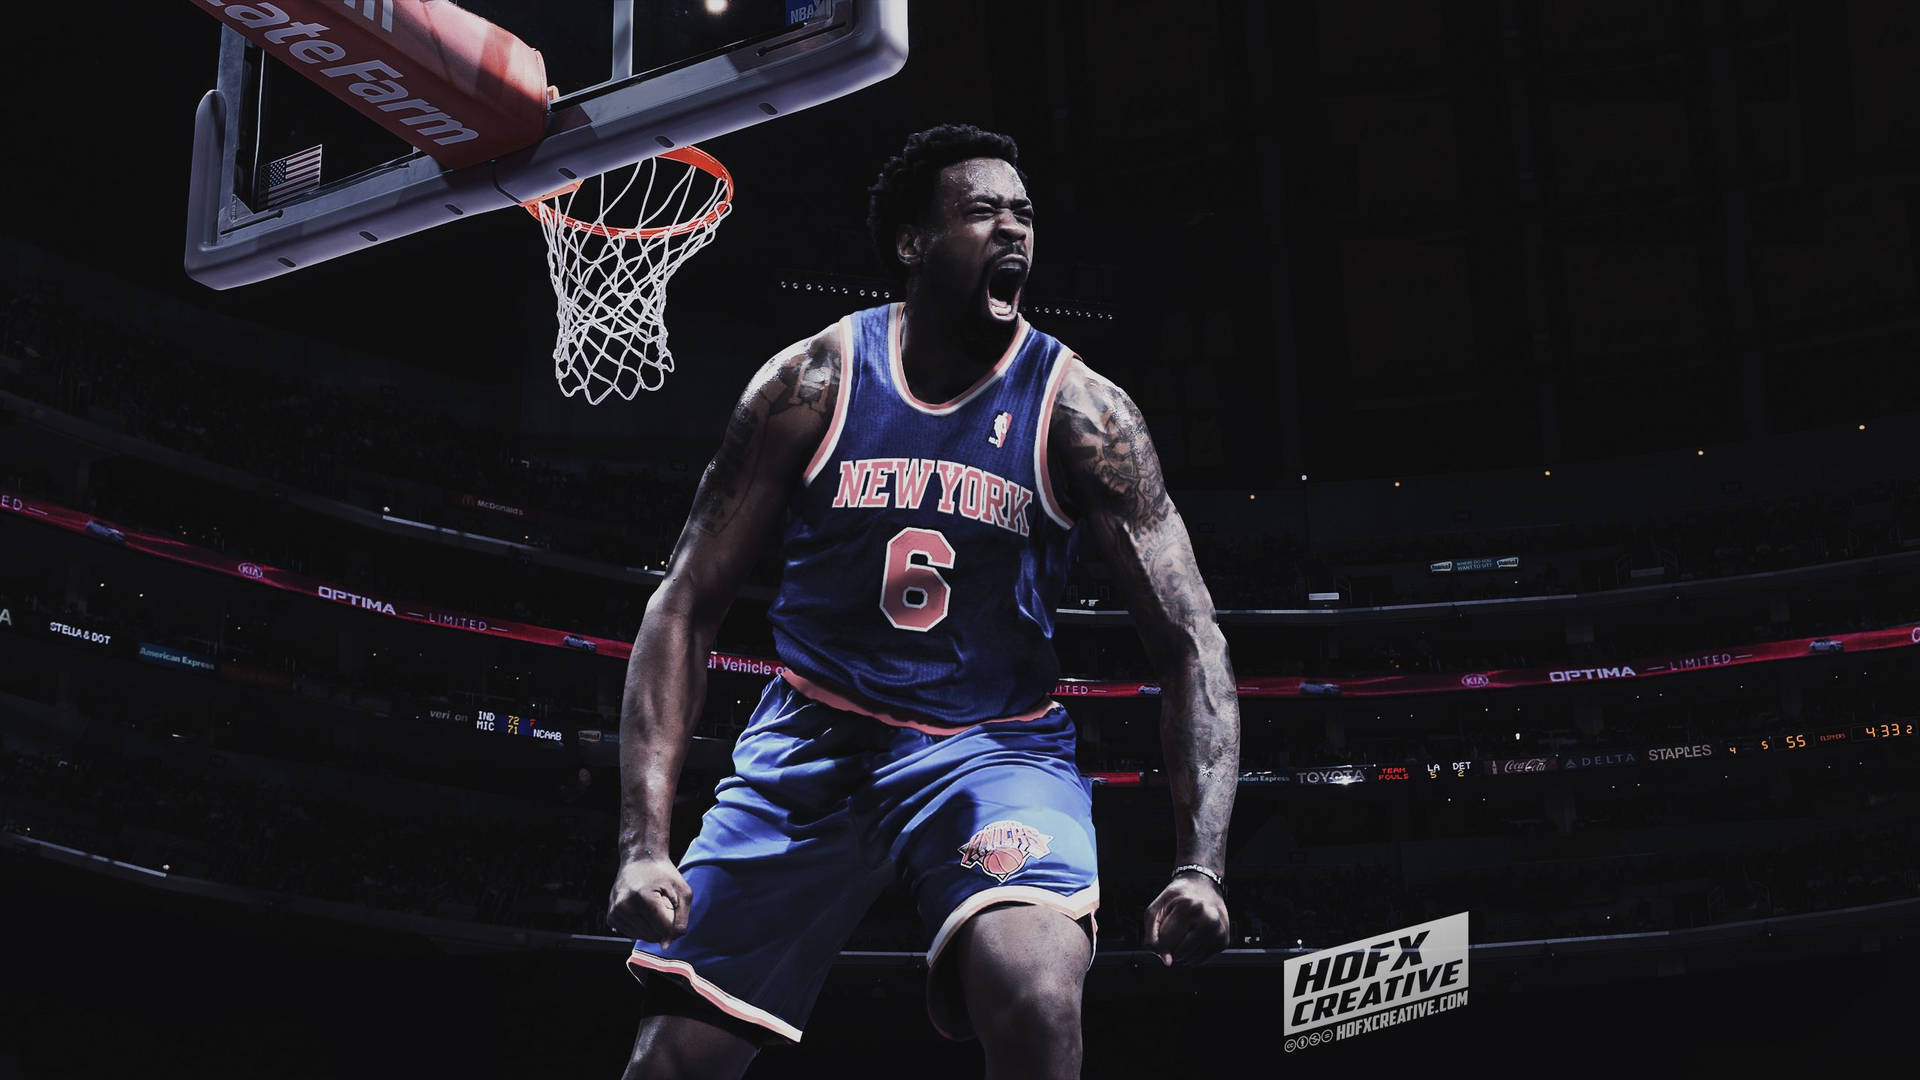 DeAndre Jordan Rocks the NBA as a New York Knick Wallpaper